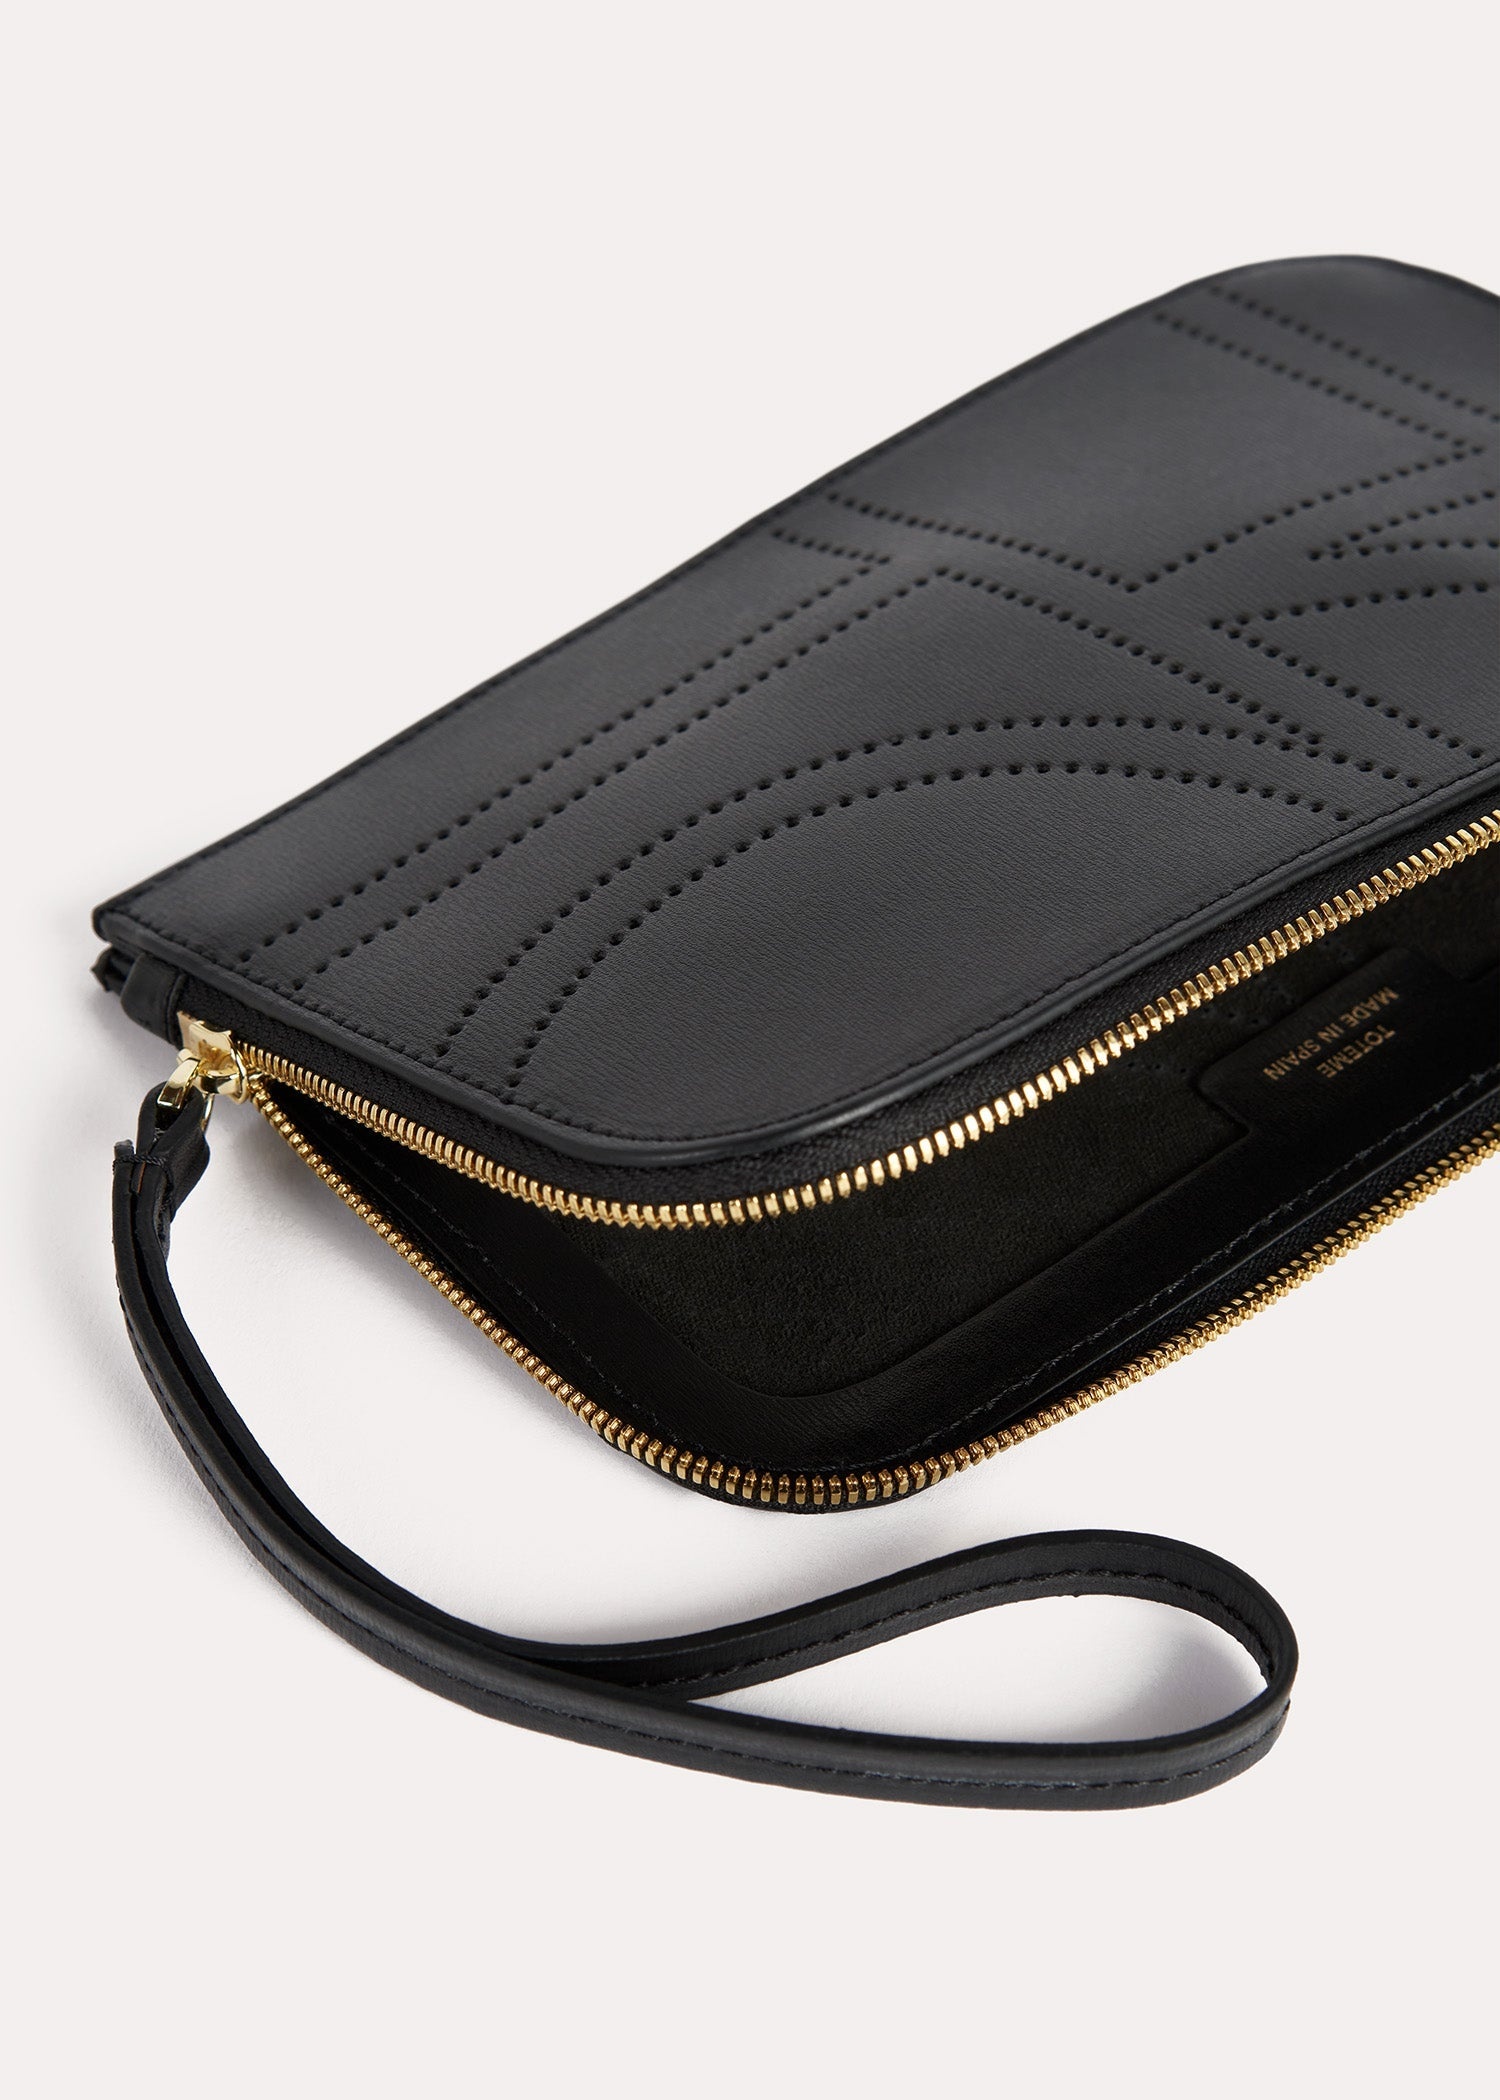 Monogram leather wristlet pouch black - 6